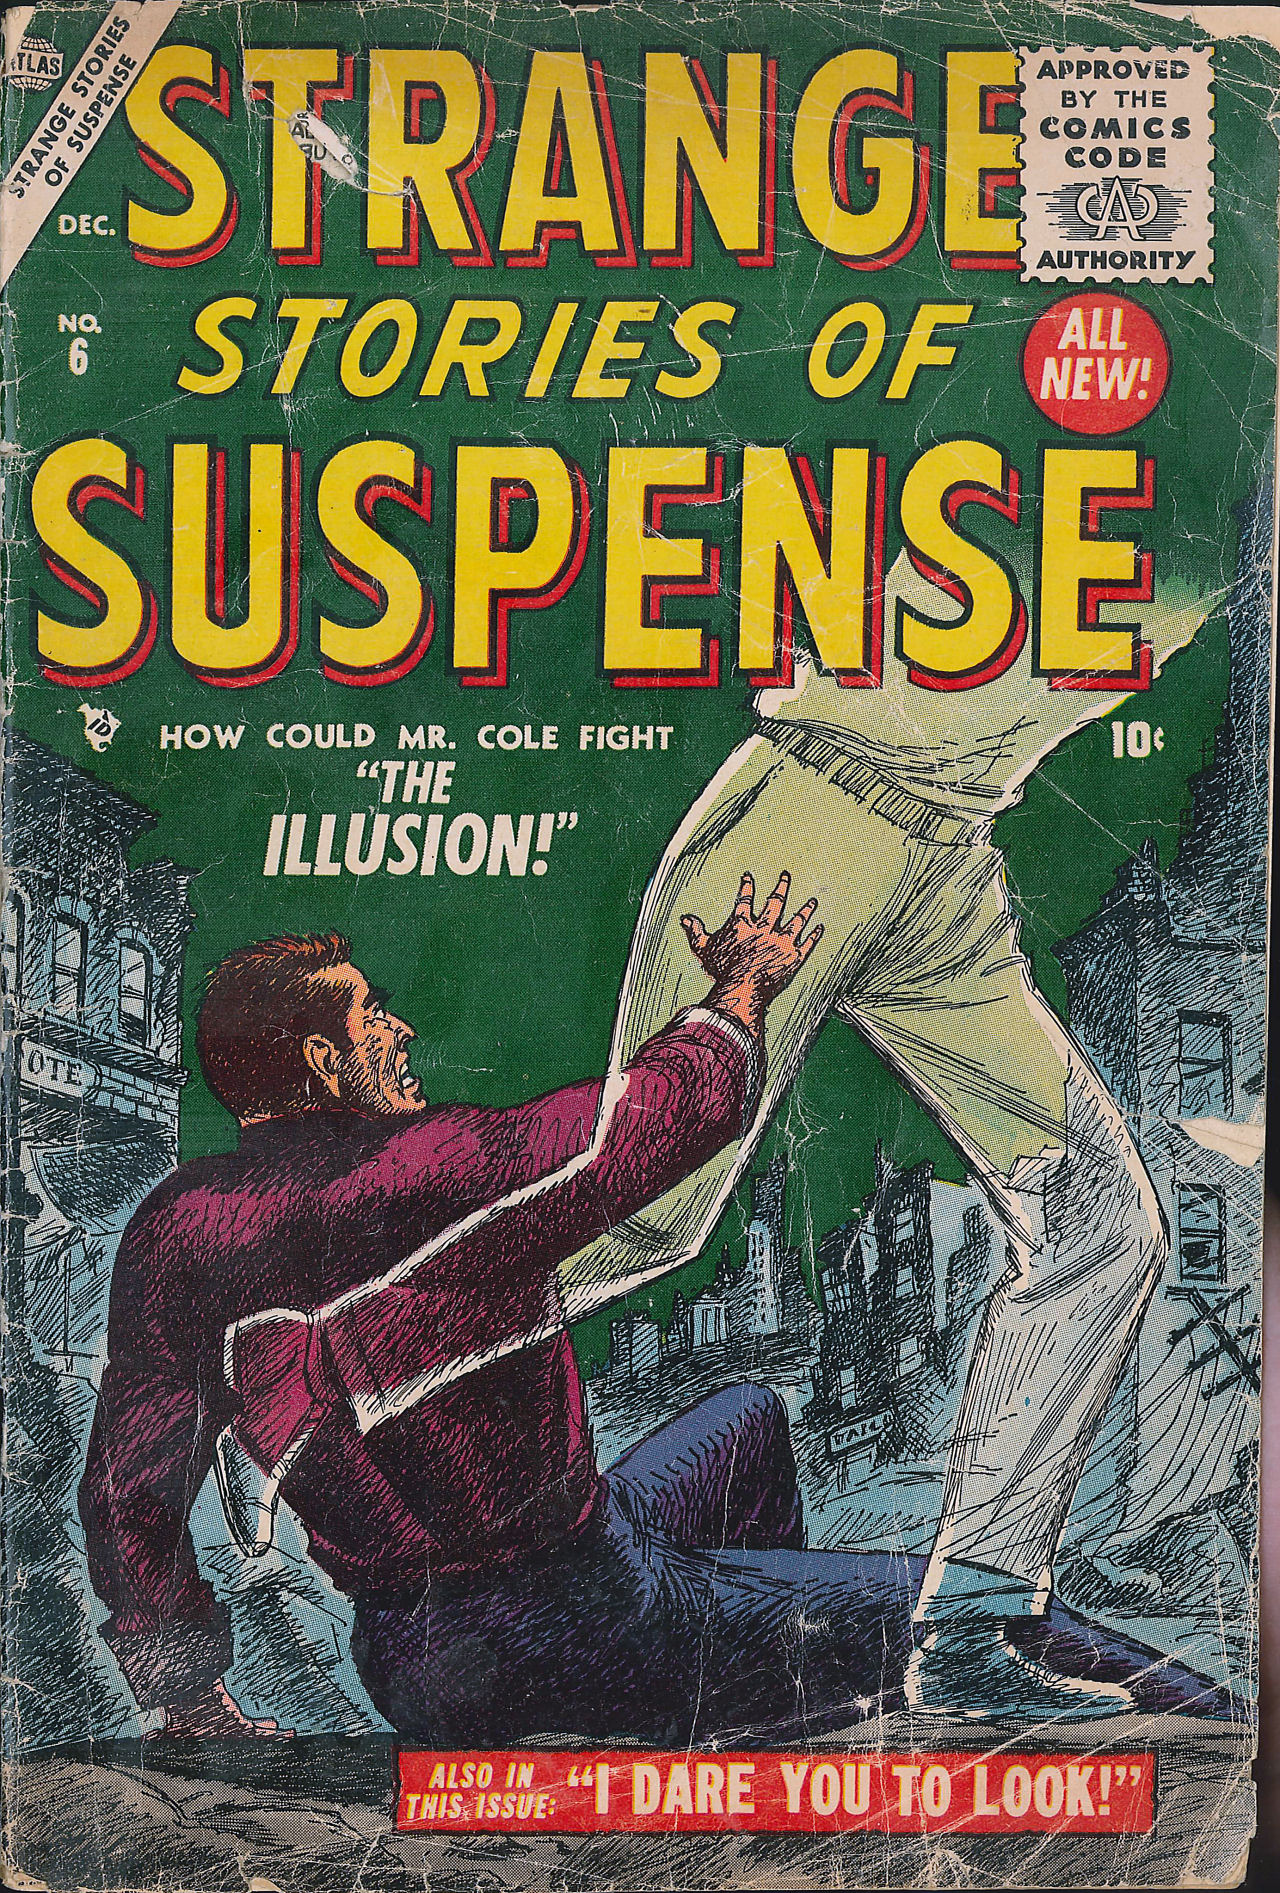 Read online Strange Stories of Suspense comic -  Issue #6 - 1